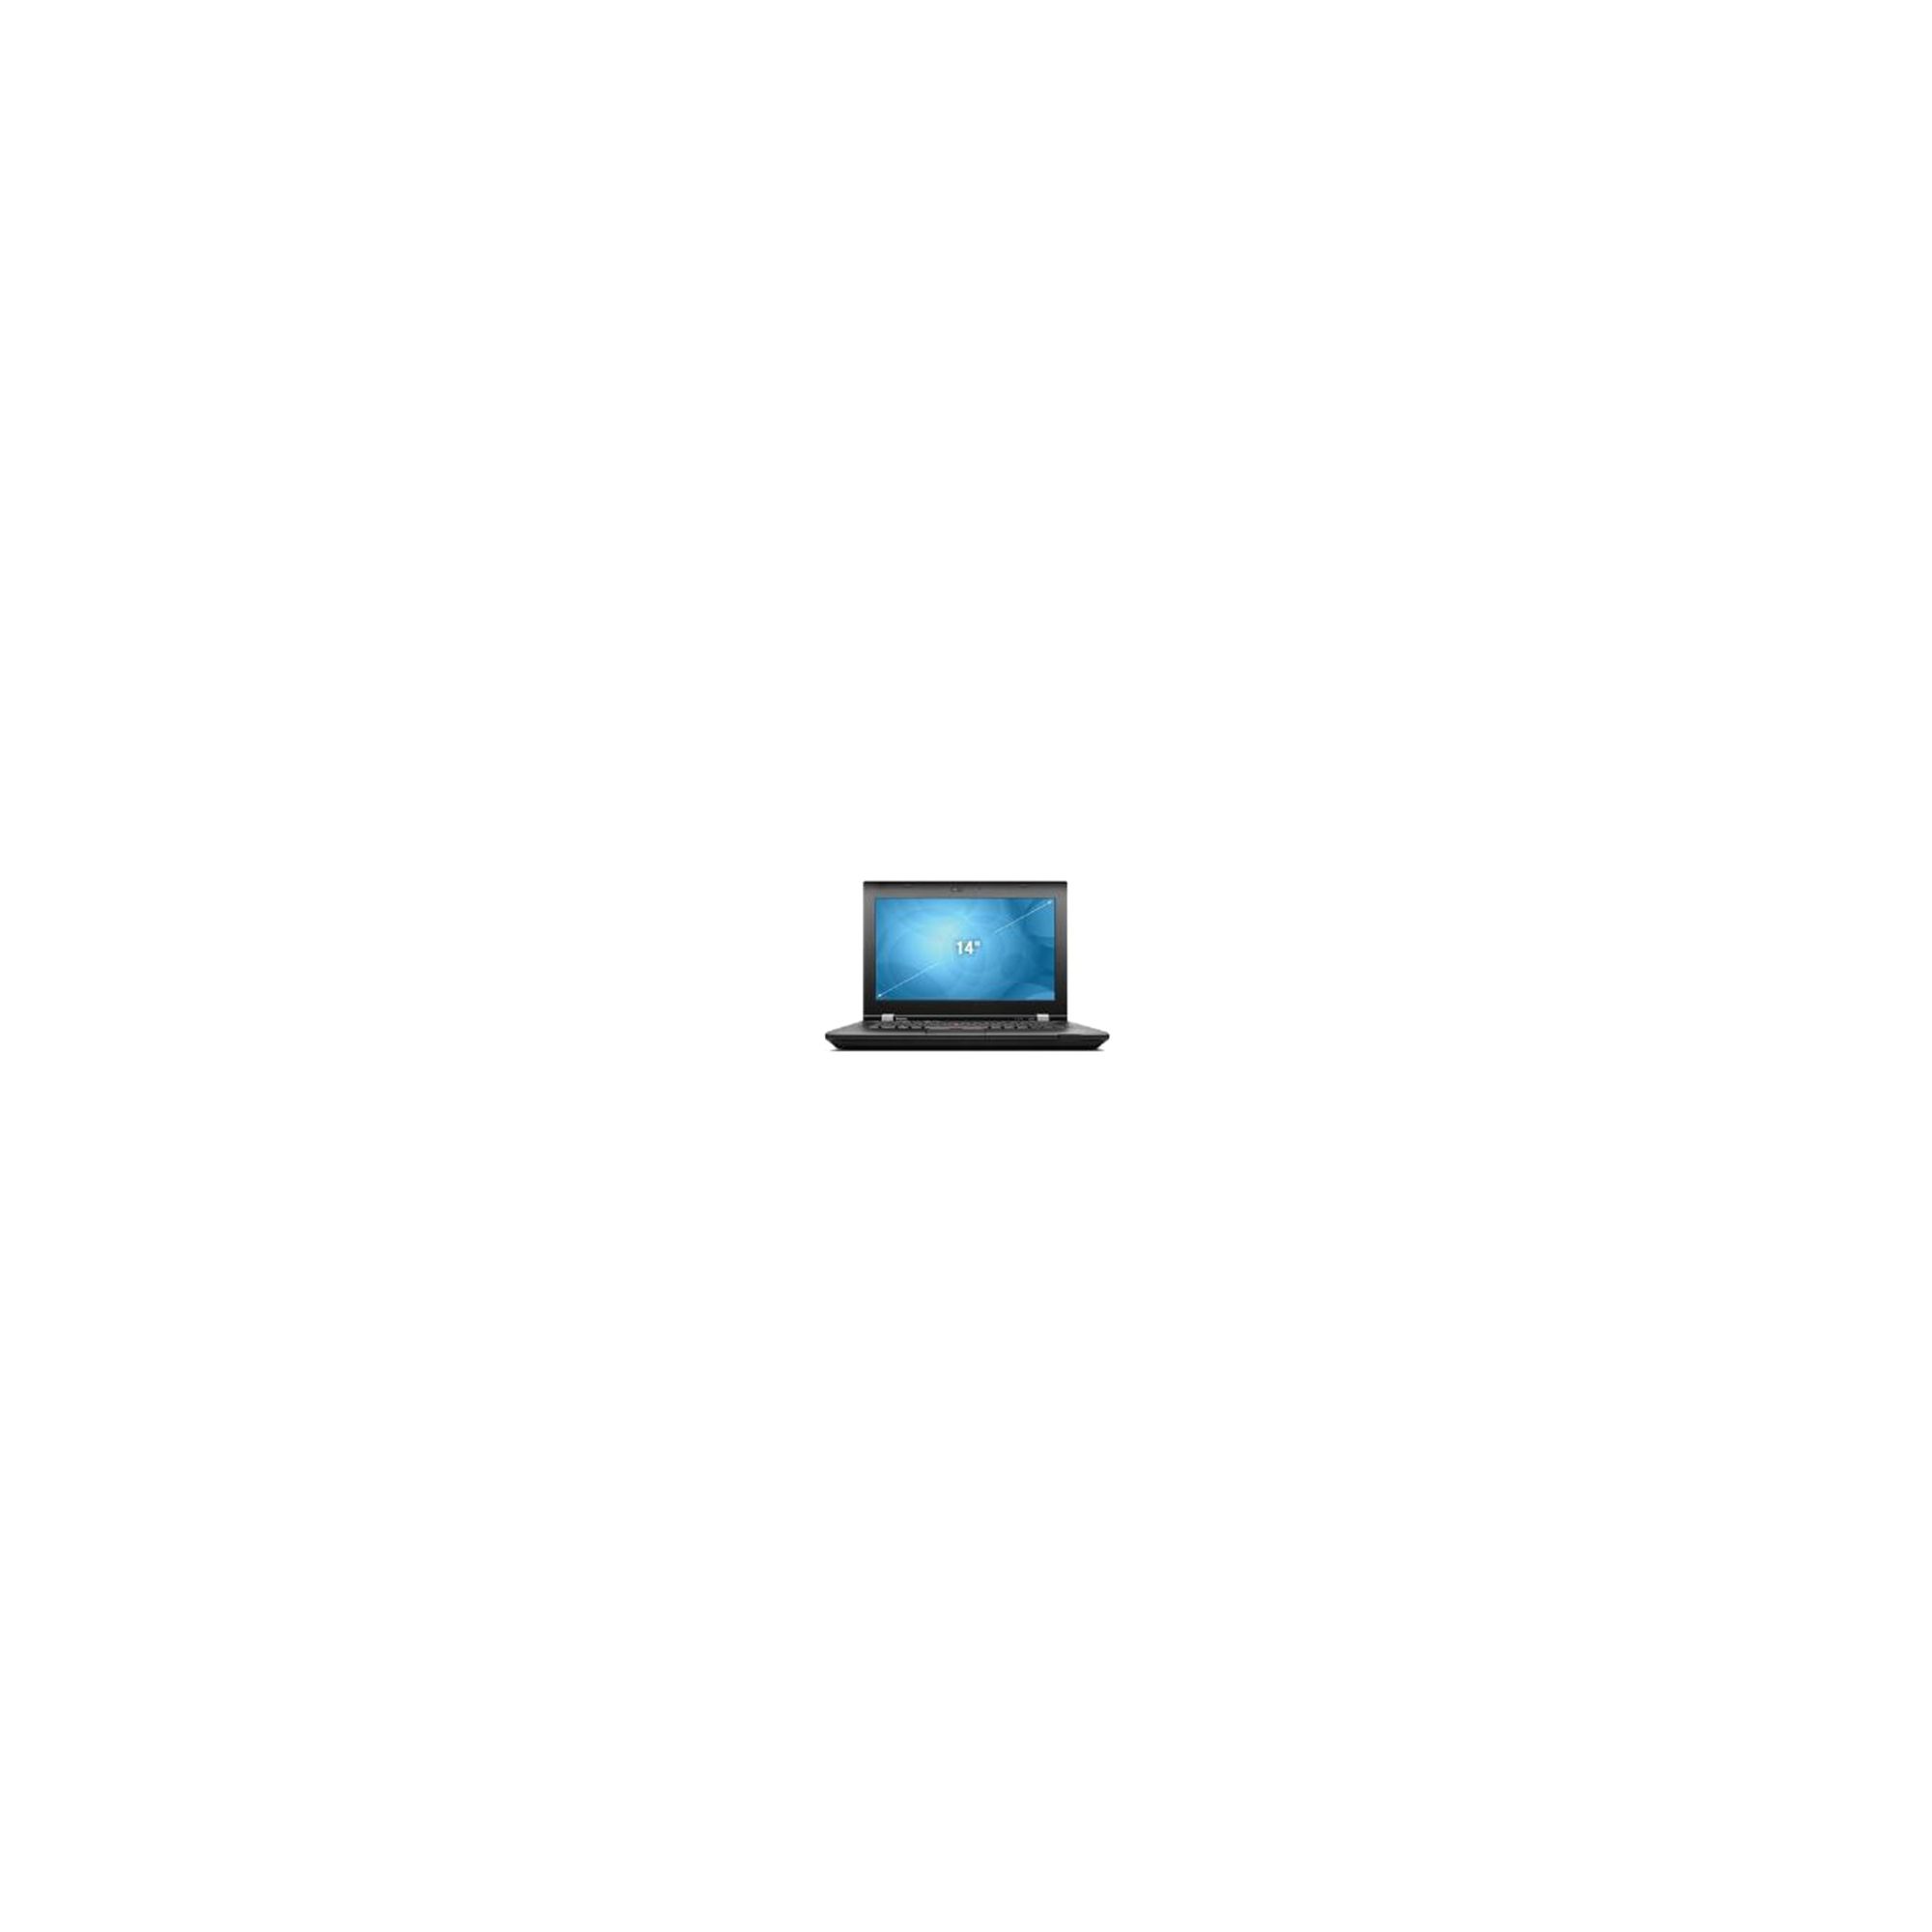 Lenovo ThinkPad L430 24683RG (14.0 inch) Notebook Core i3 (3110M) 2.4GHz 4GB 500GB DVD±RW WLAN BT Webcam Windows 7 Pro 64-bit/Windows 8 Pro 64-bit at Tesco Direct